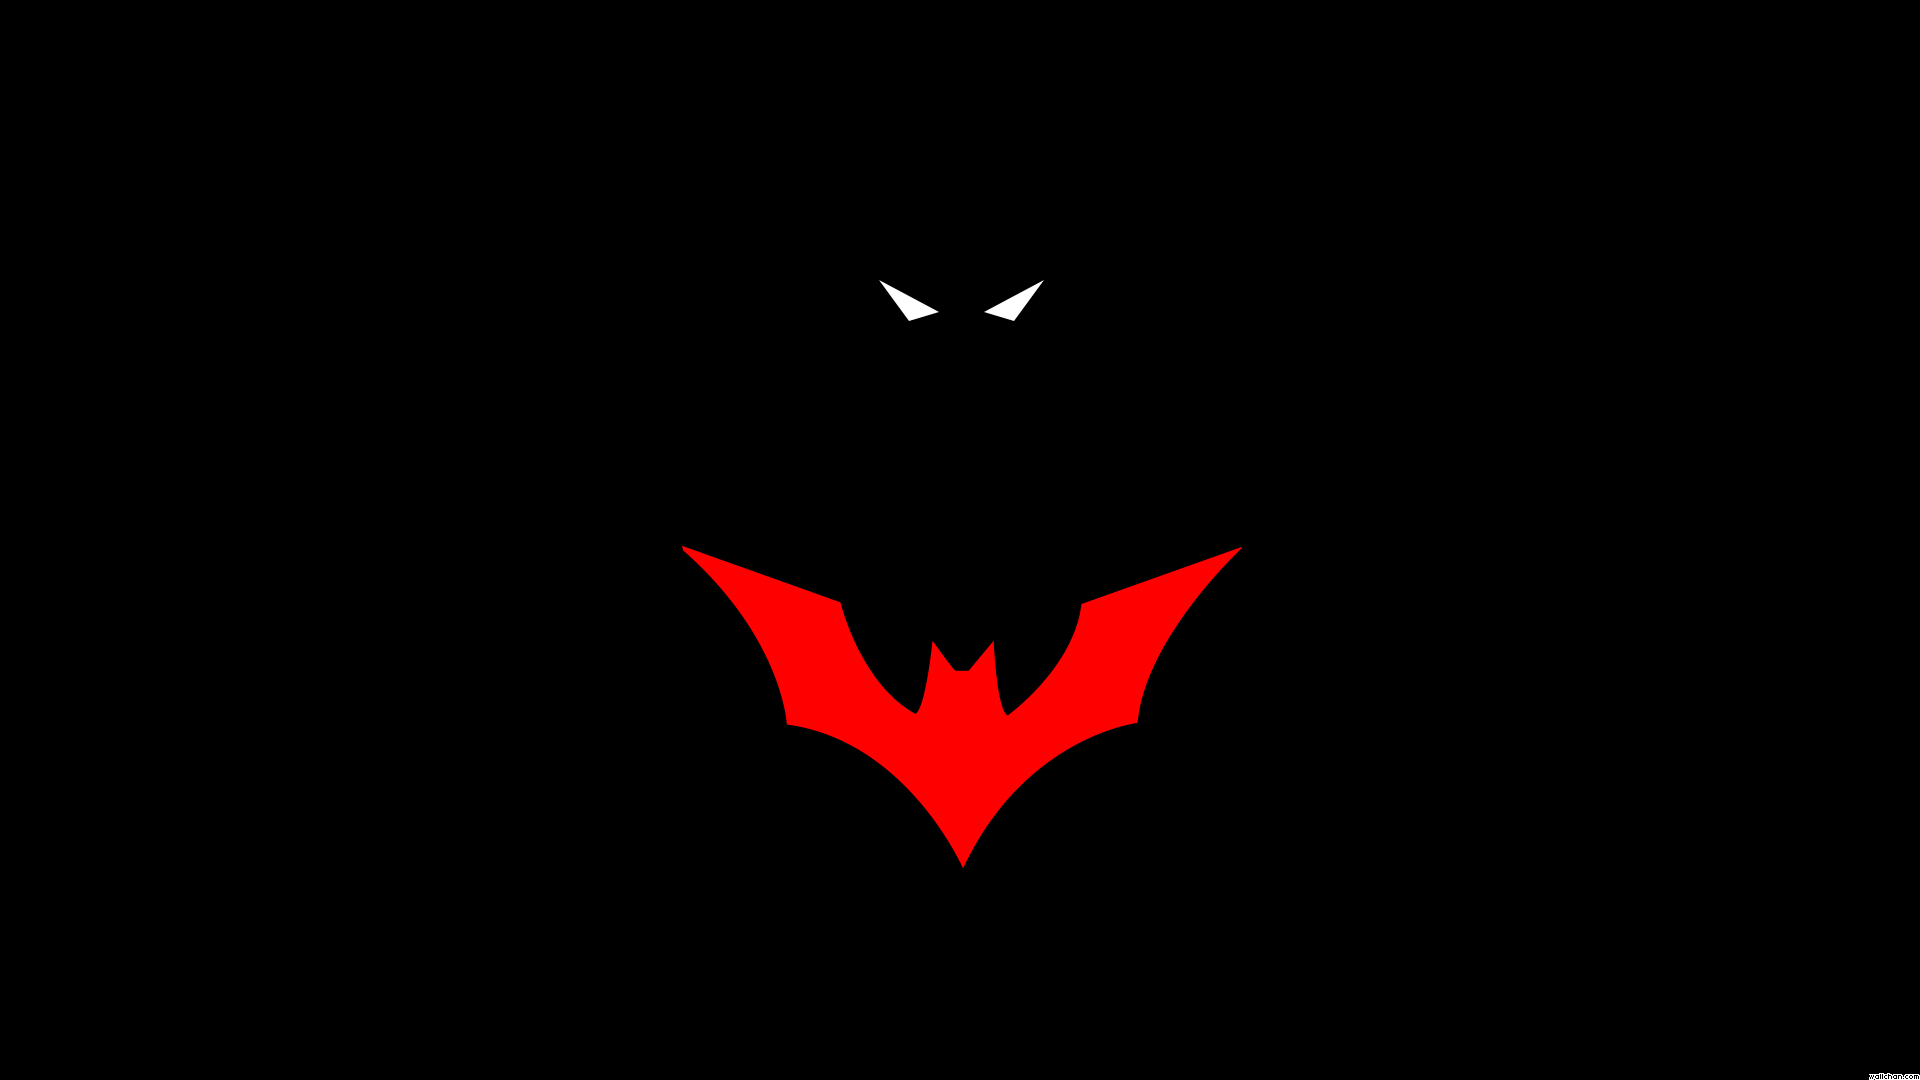 Wallpaper, logo, Batman Beyond, wing, bat, computer wallpaper, font